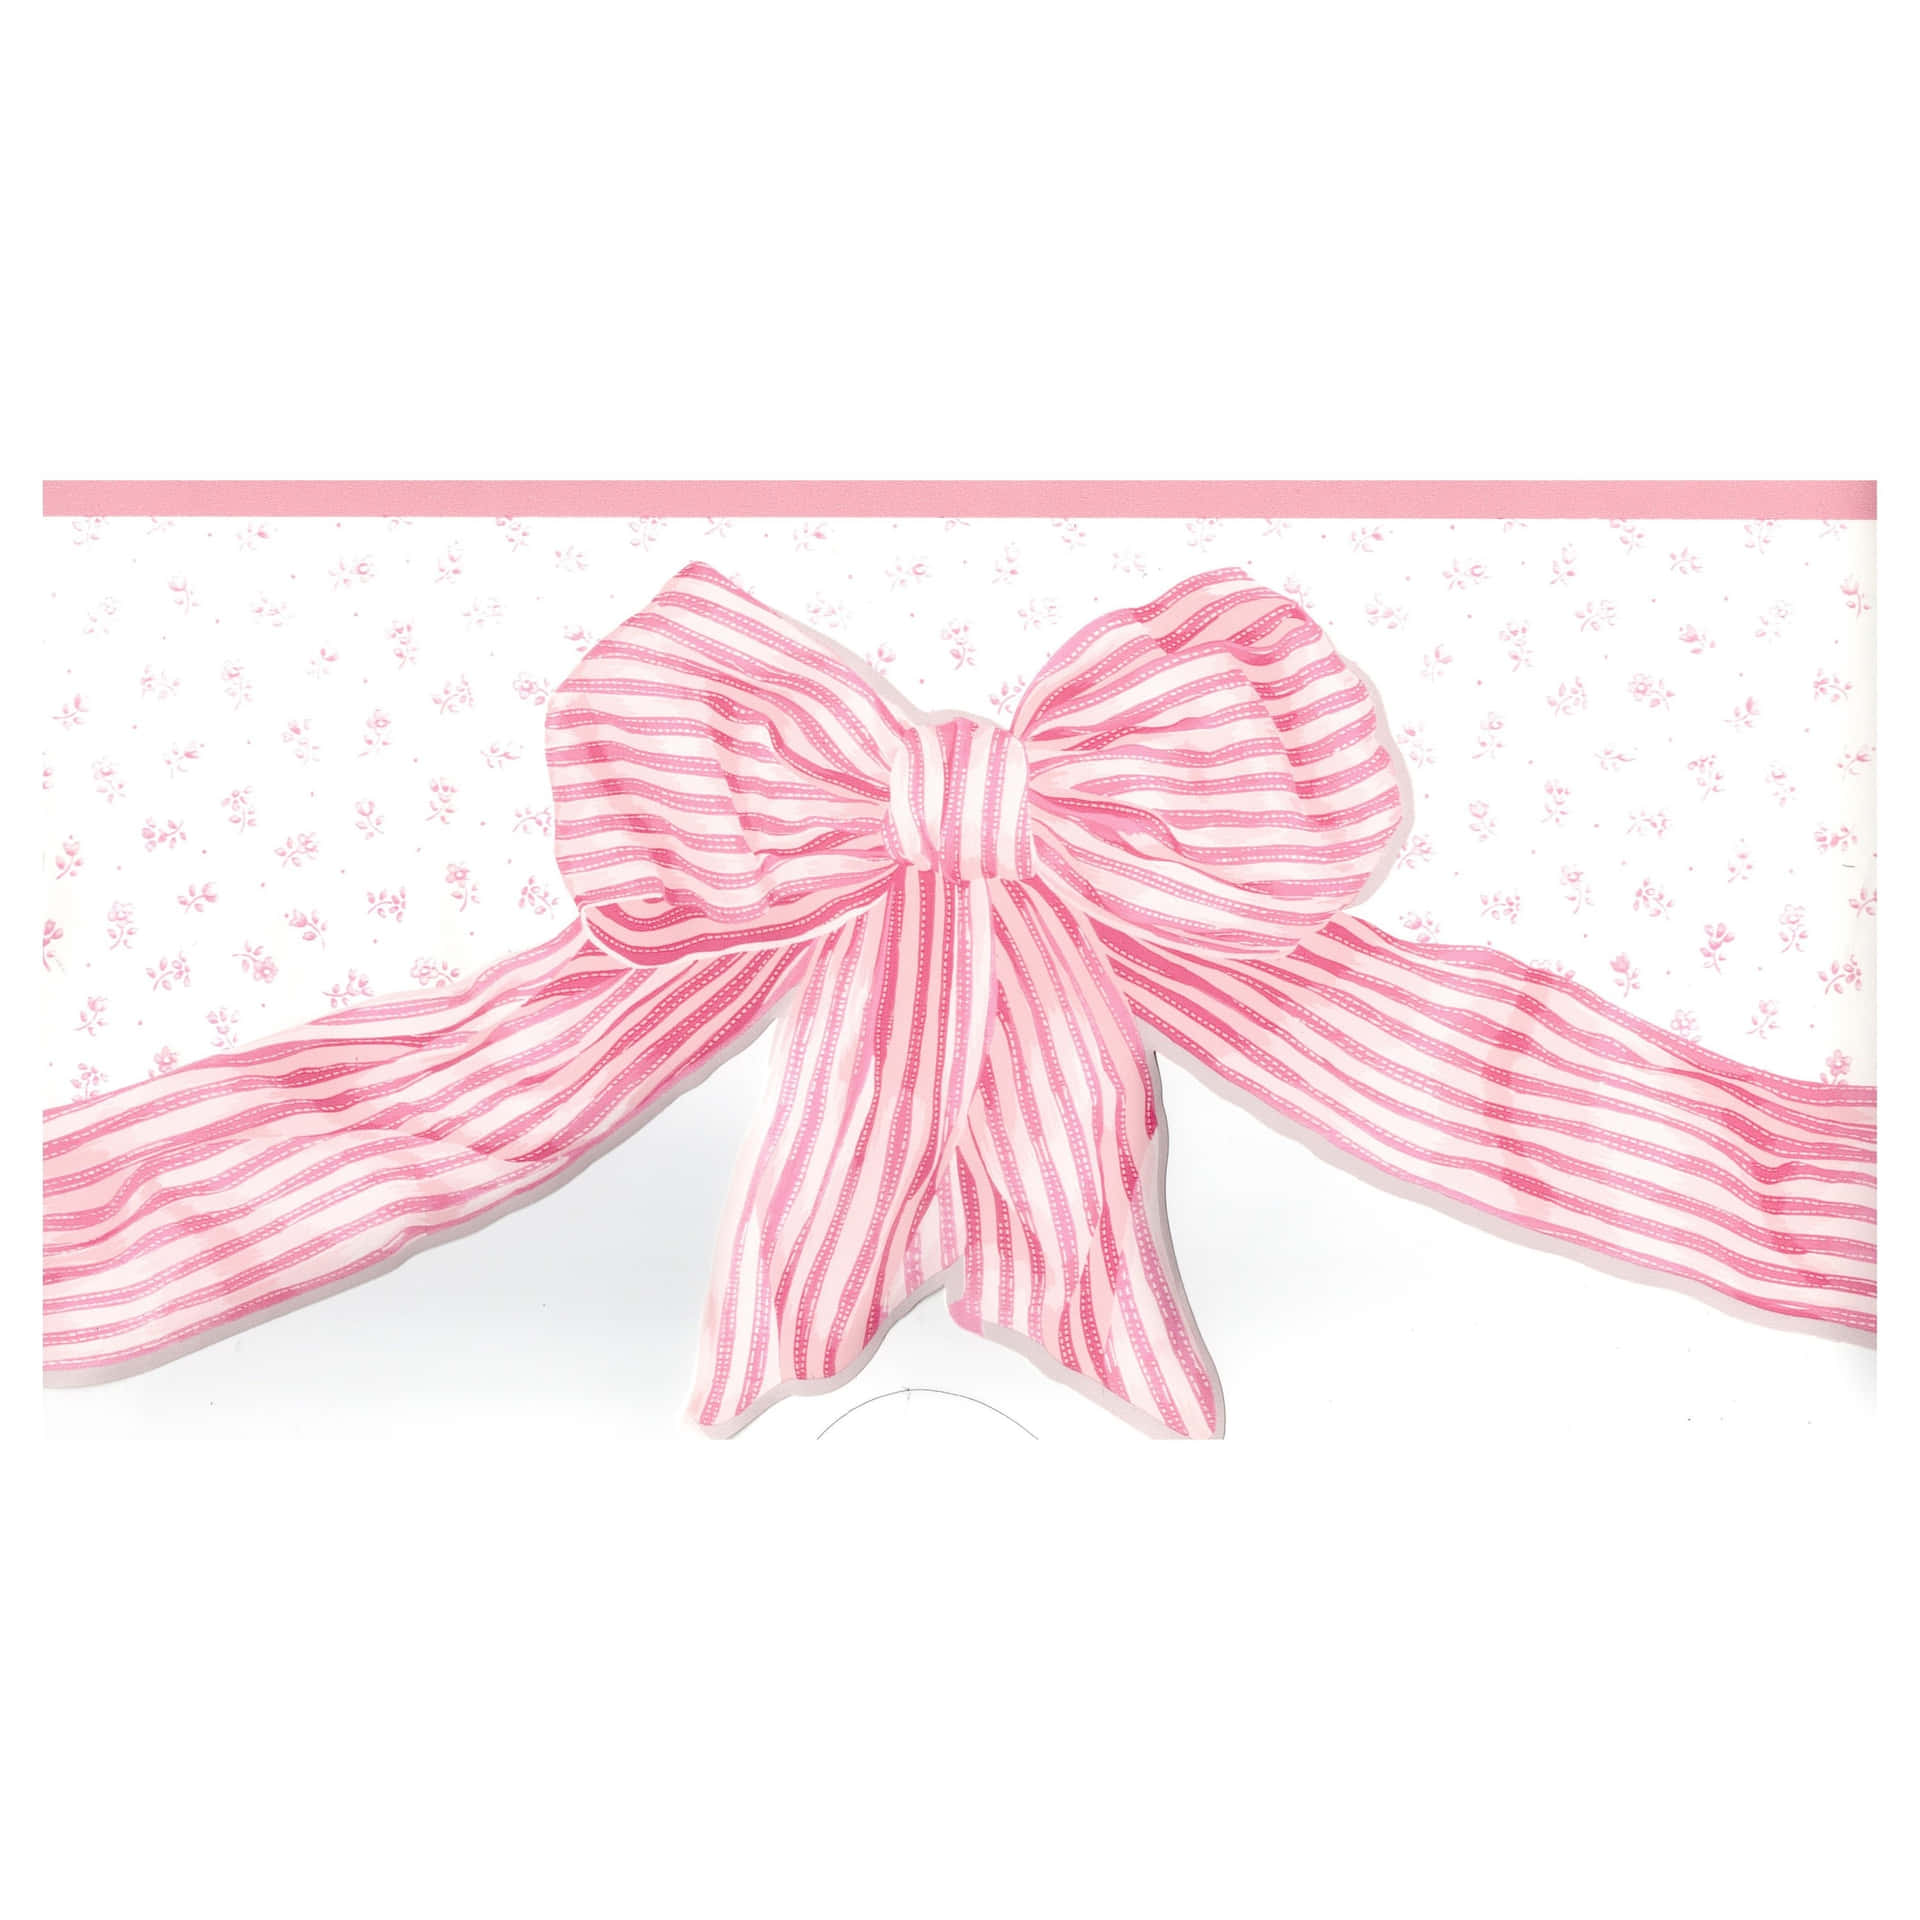 Striped Pink Bowon Floral Background.jpg Wallpaper